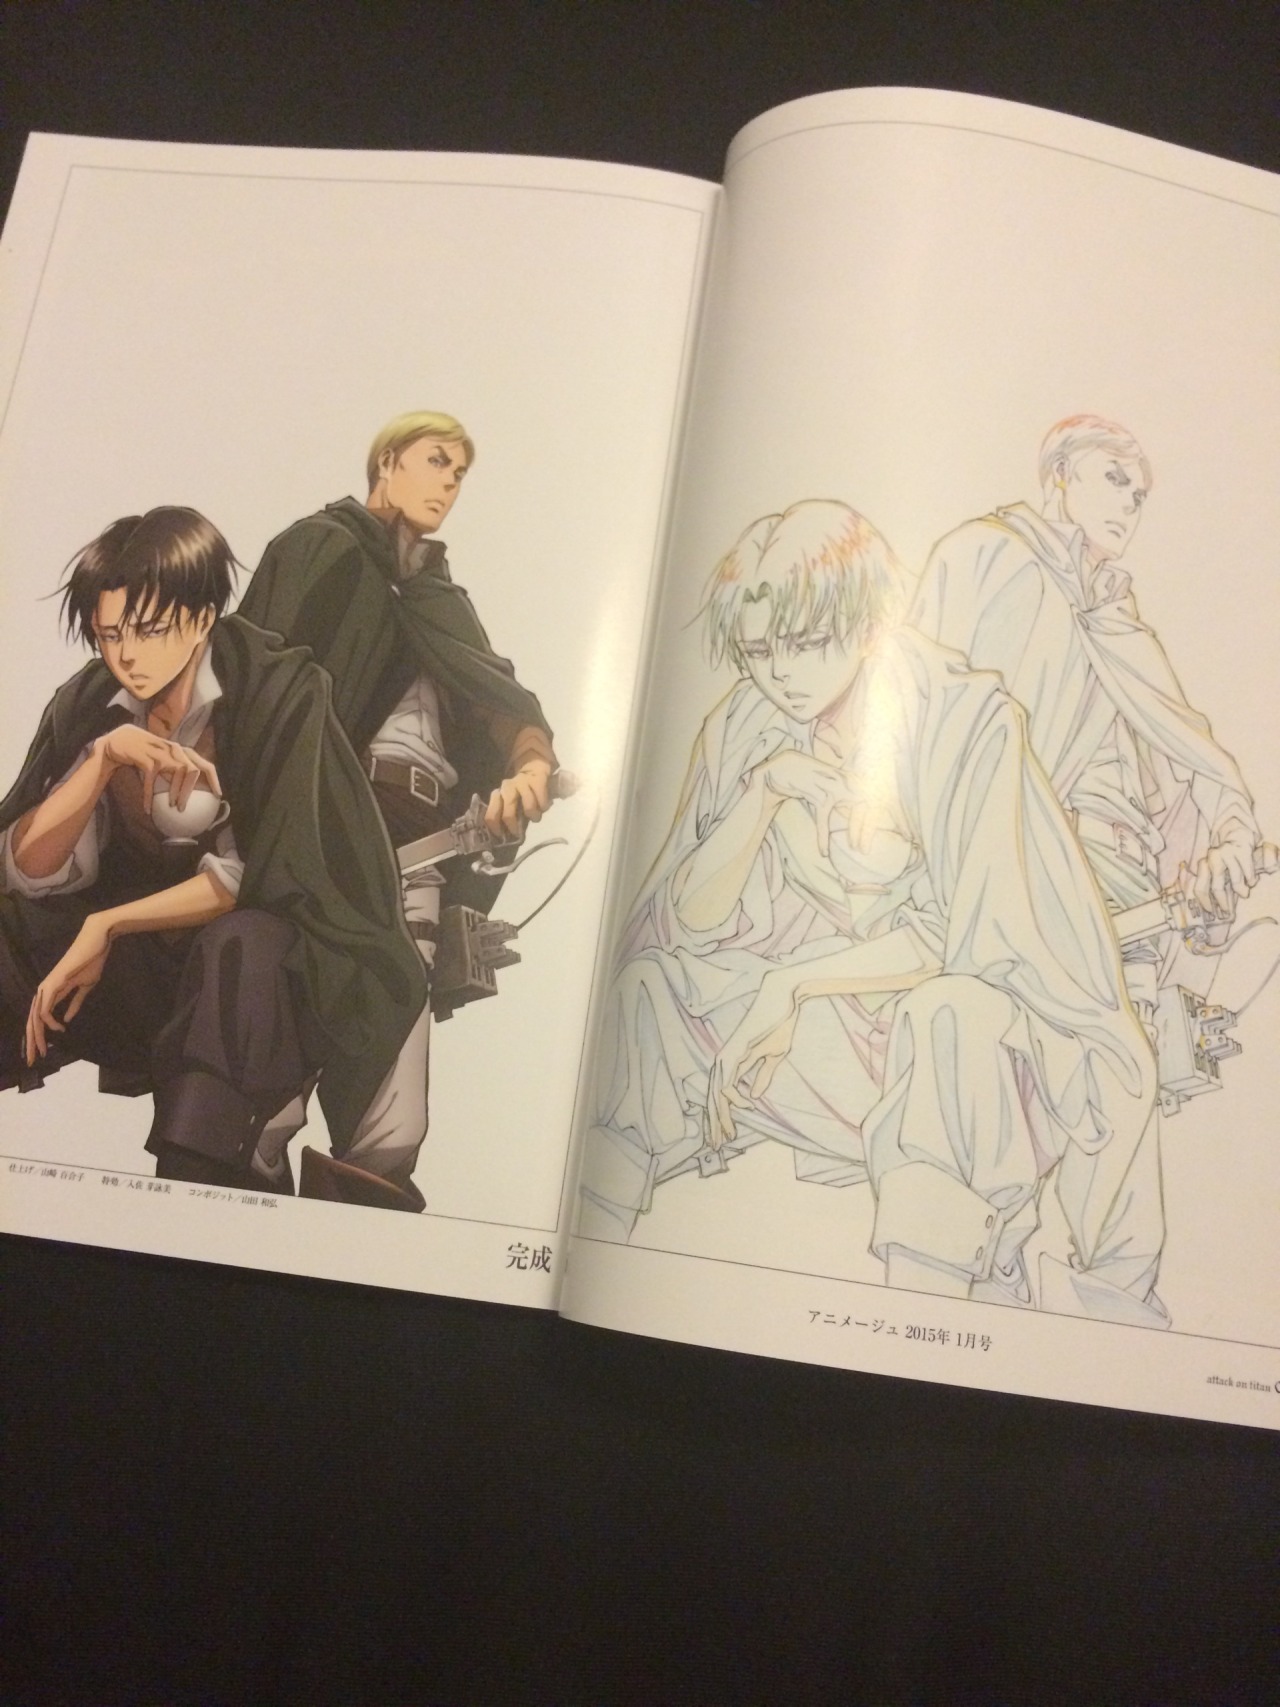 Today the 2nd volume of WIT STUDIO’s Shingeki no Kyojin 1st Season Illustrations